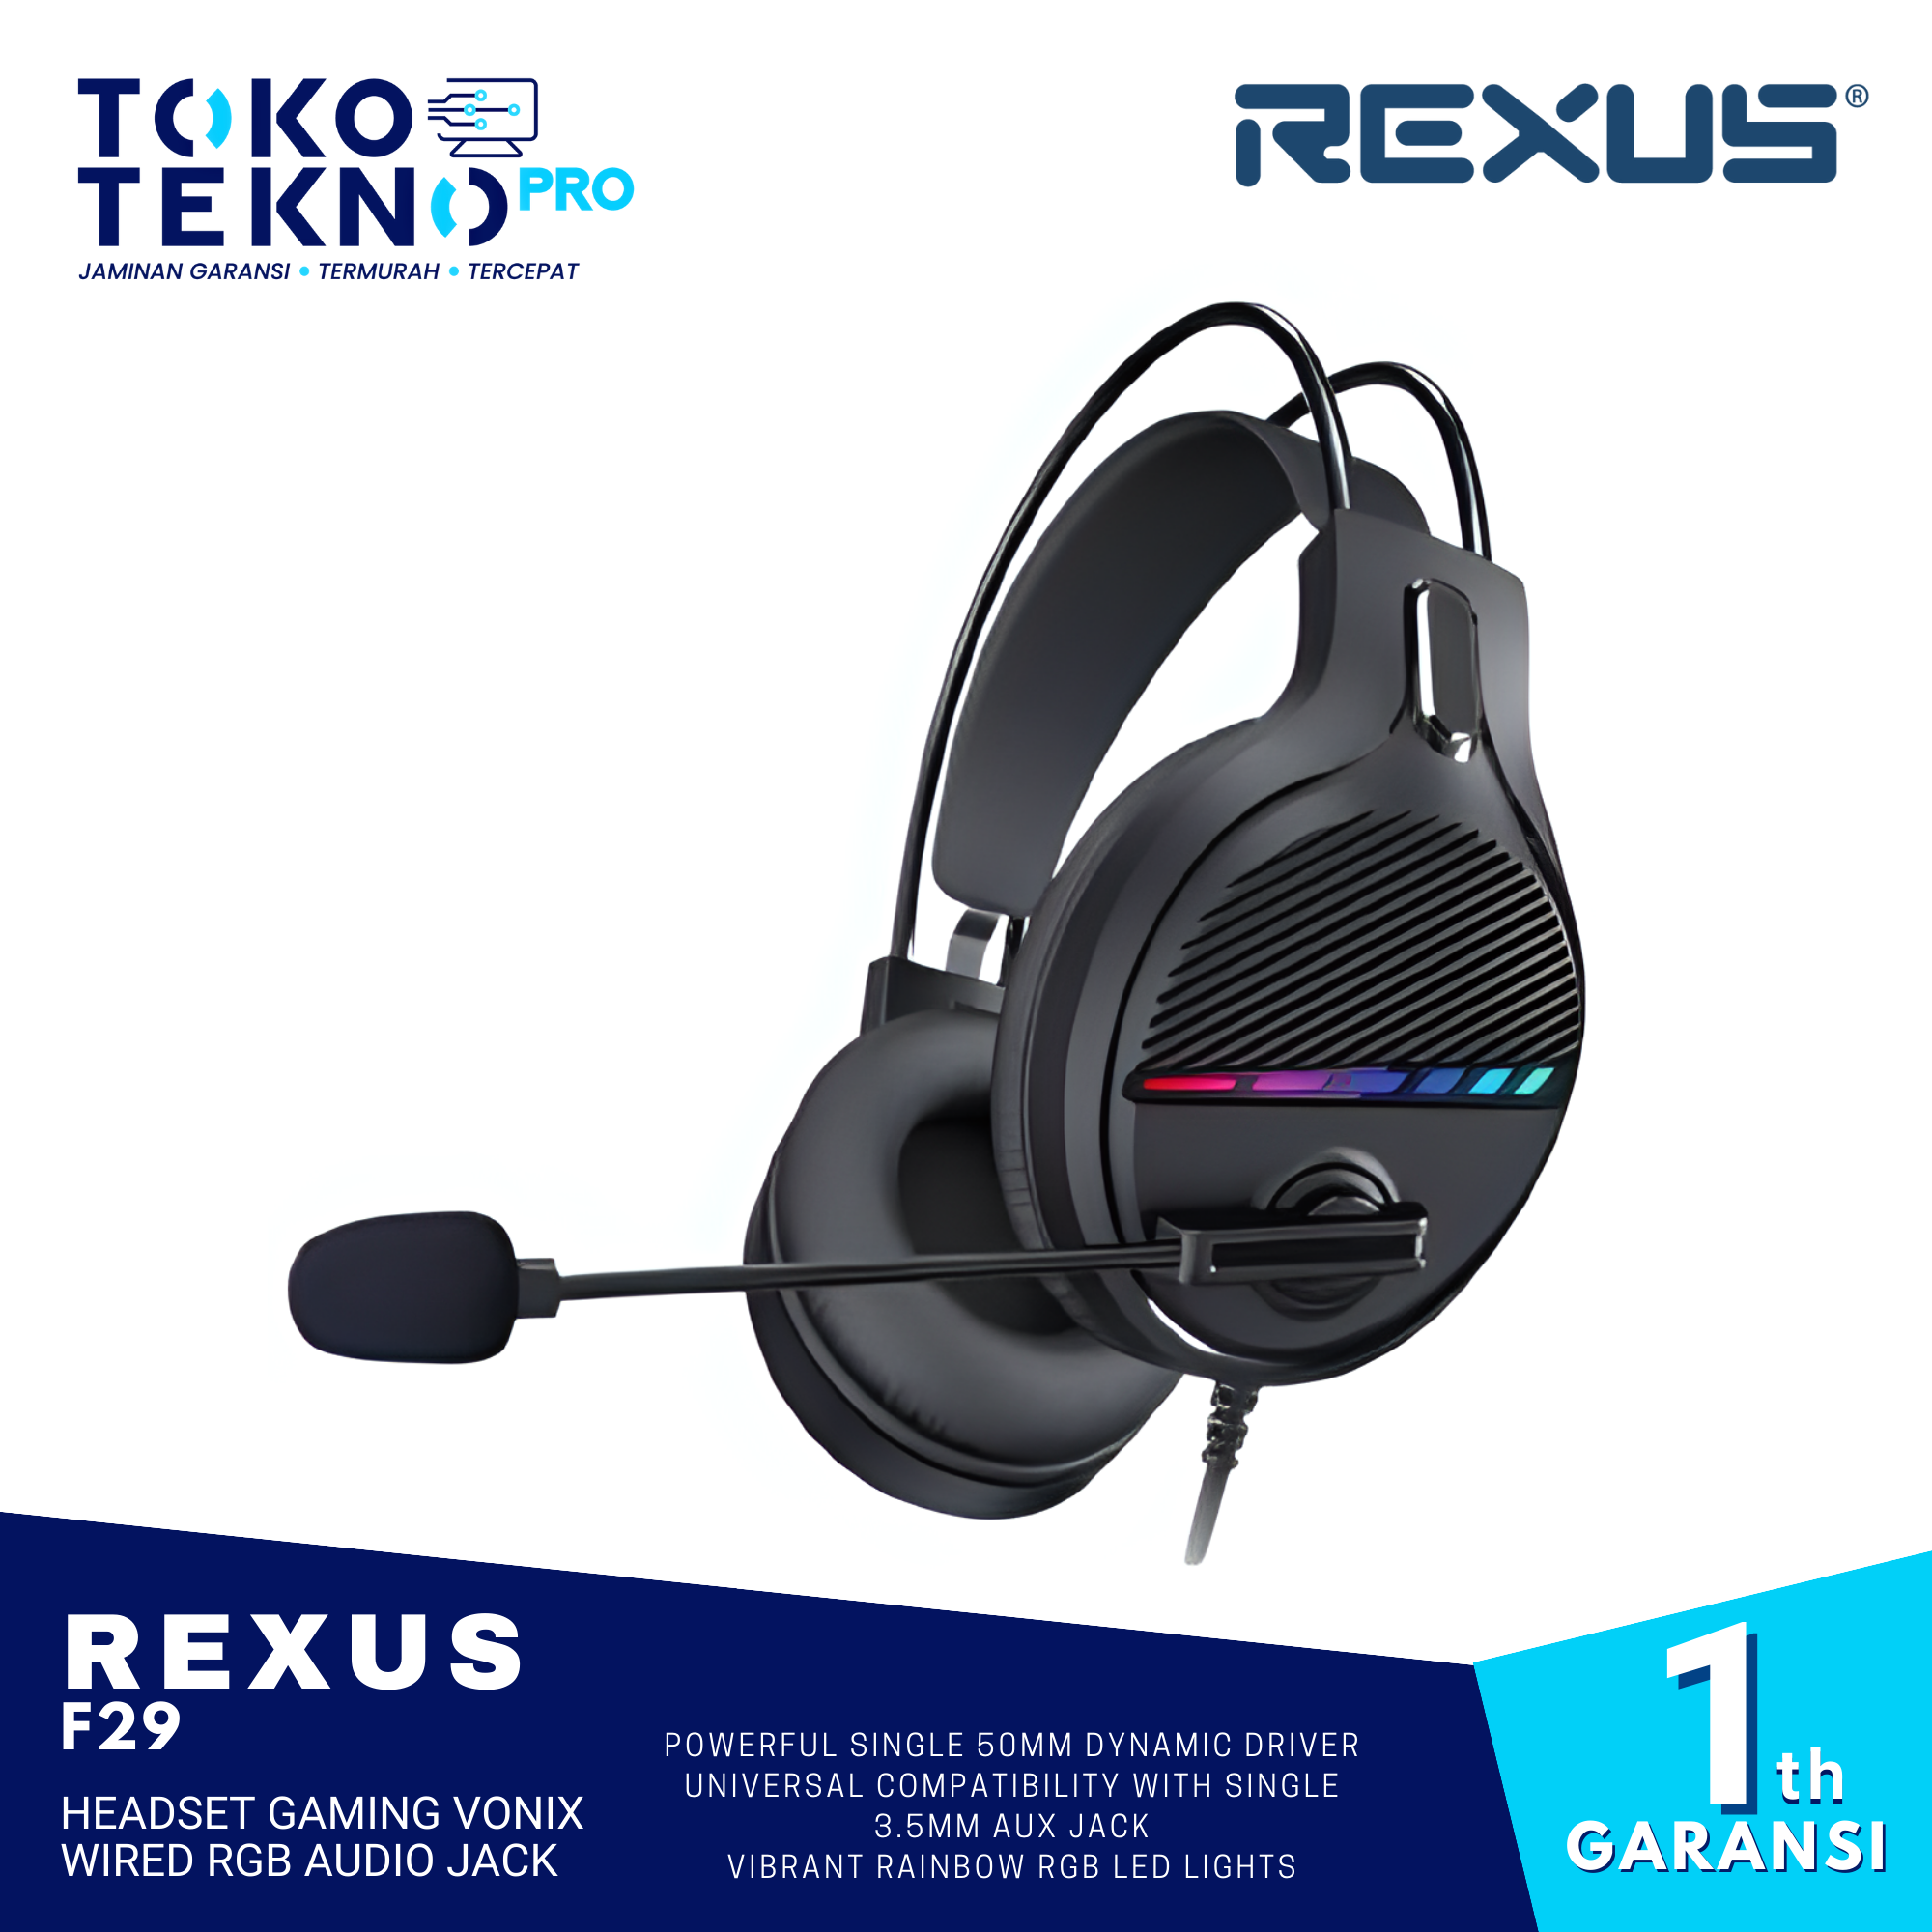 Rexus F29 Headset Gaming Vonix Wired RGB Audio Jack